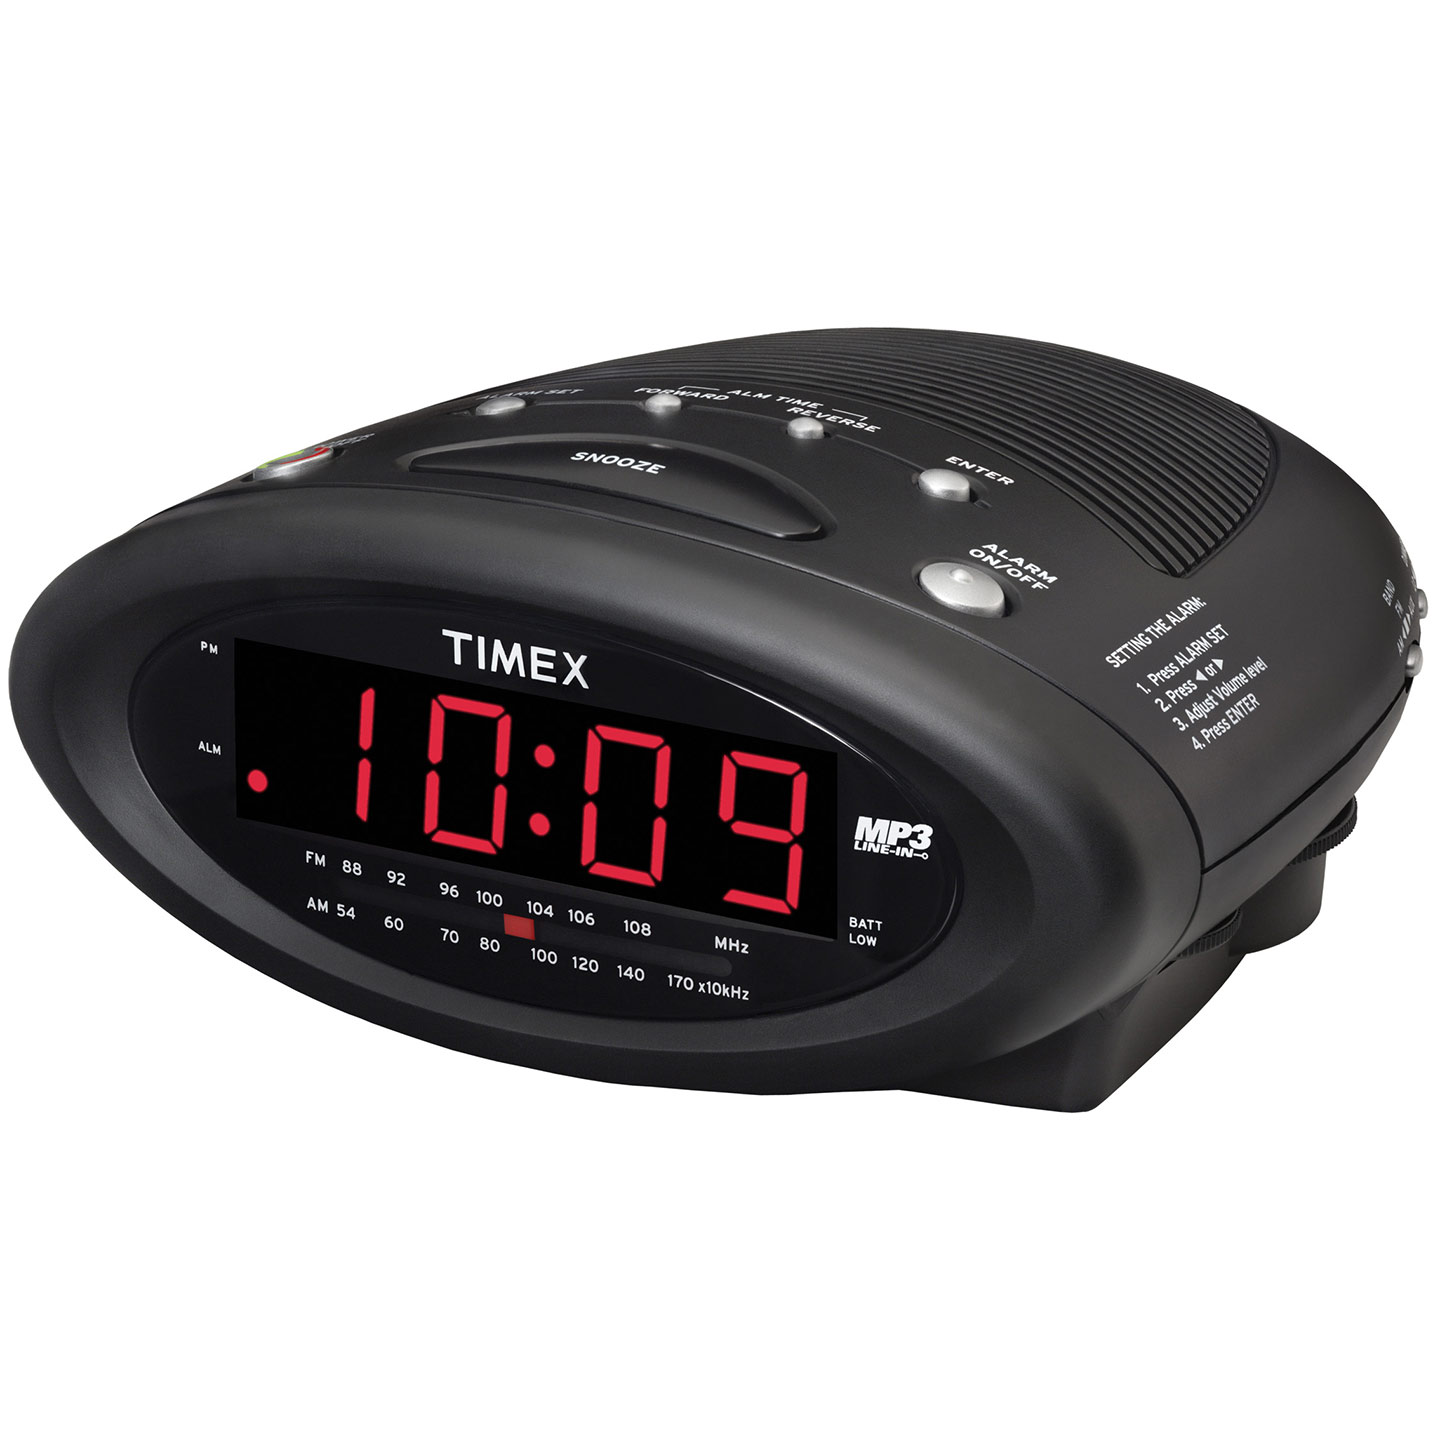 timex alarm clock radio instructions